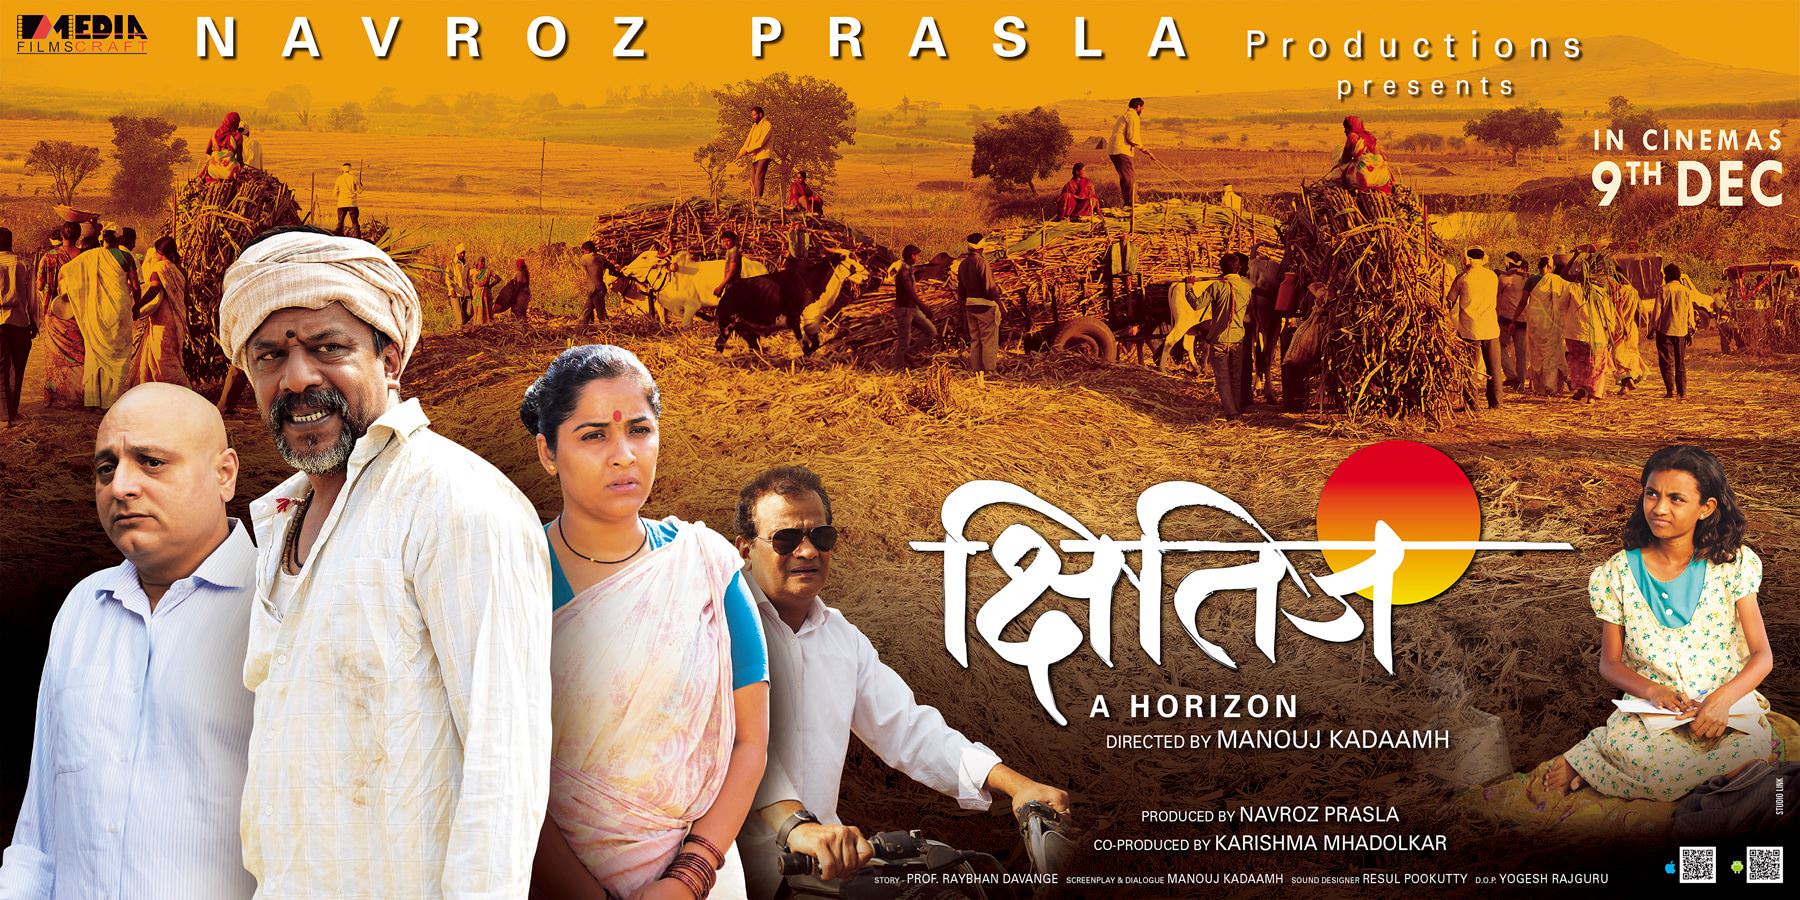 Hd Marathi Movies Free Download 2014